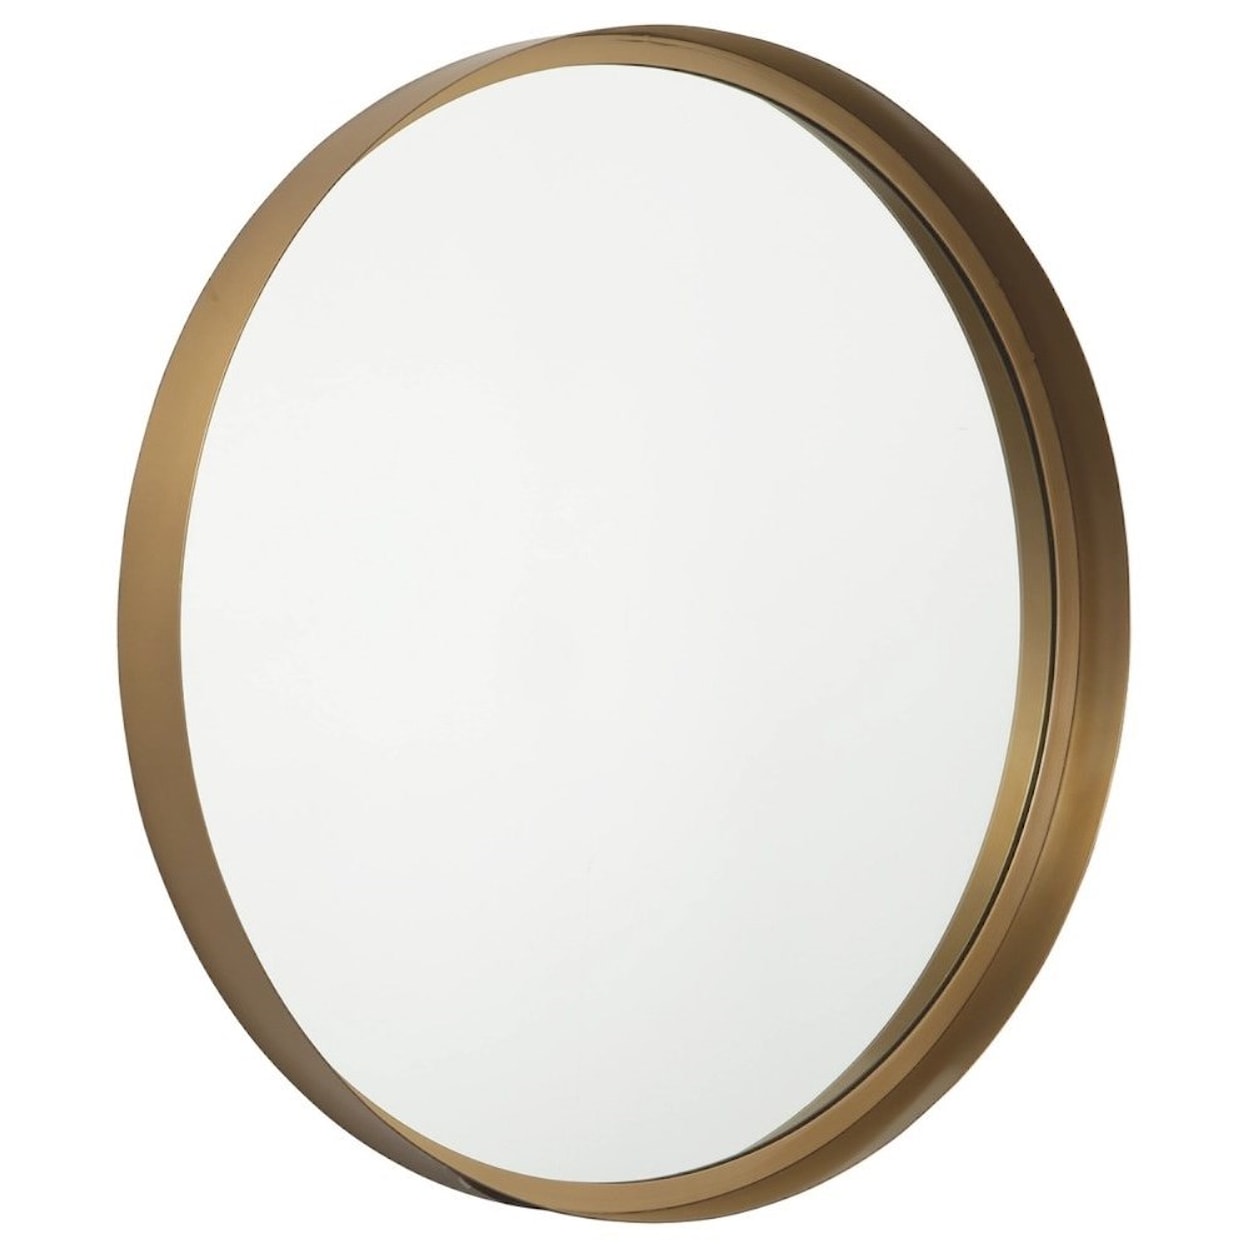 Benchcraft Accent Mirrors Elanah Gold Finish Accent Mirror